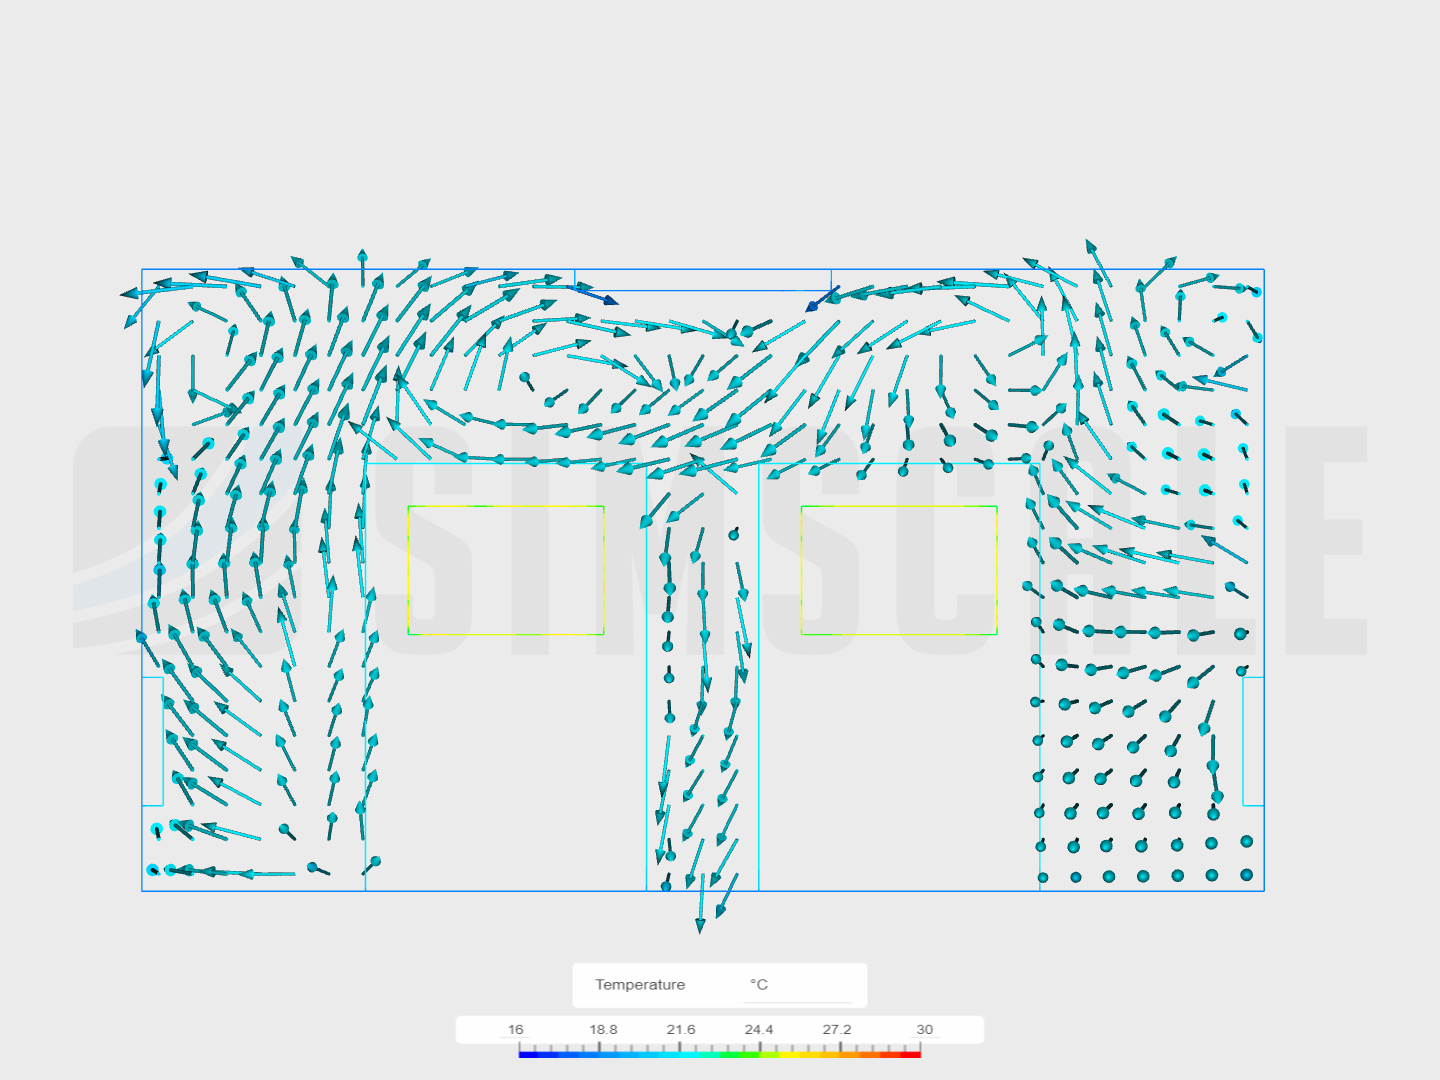 CFD air flow analysis on server room image